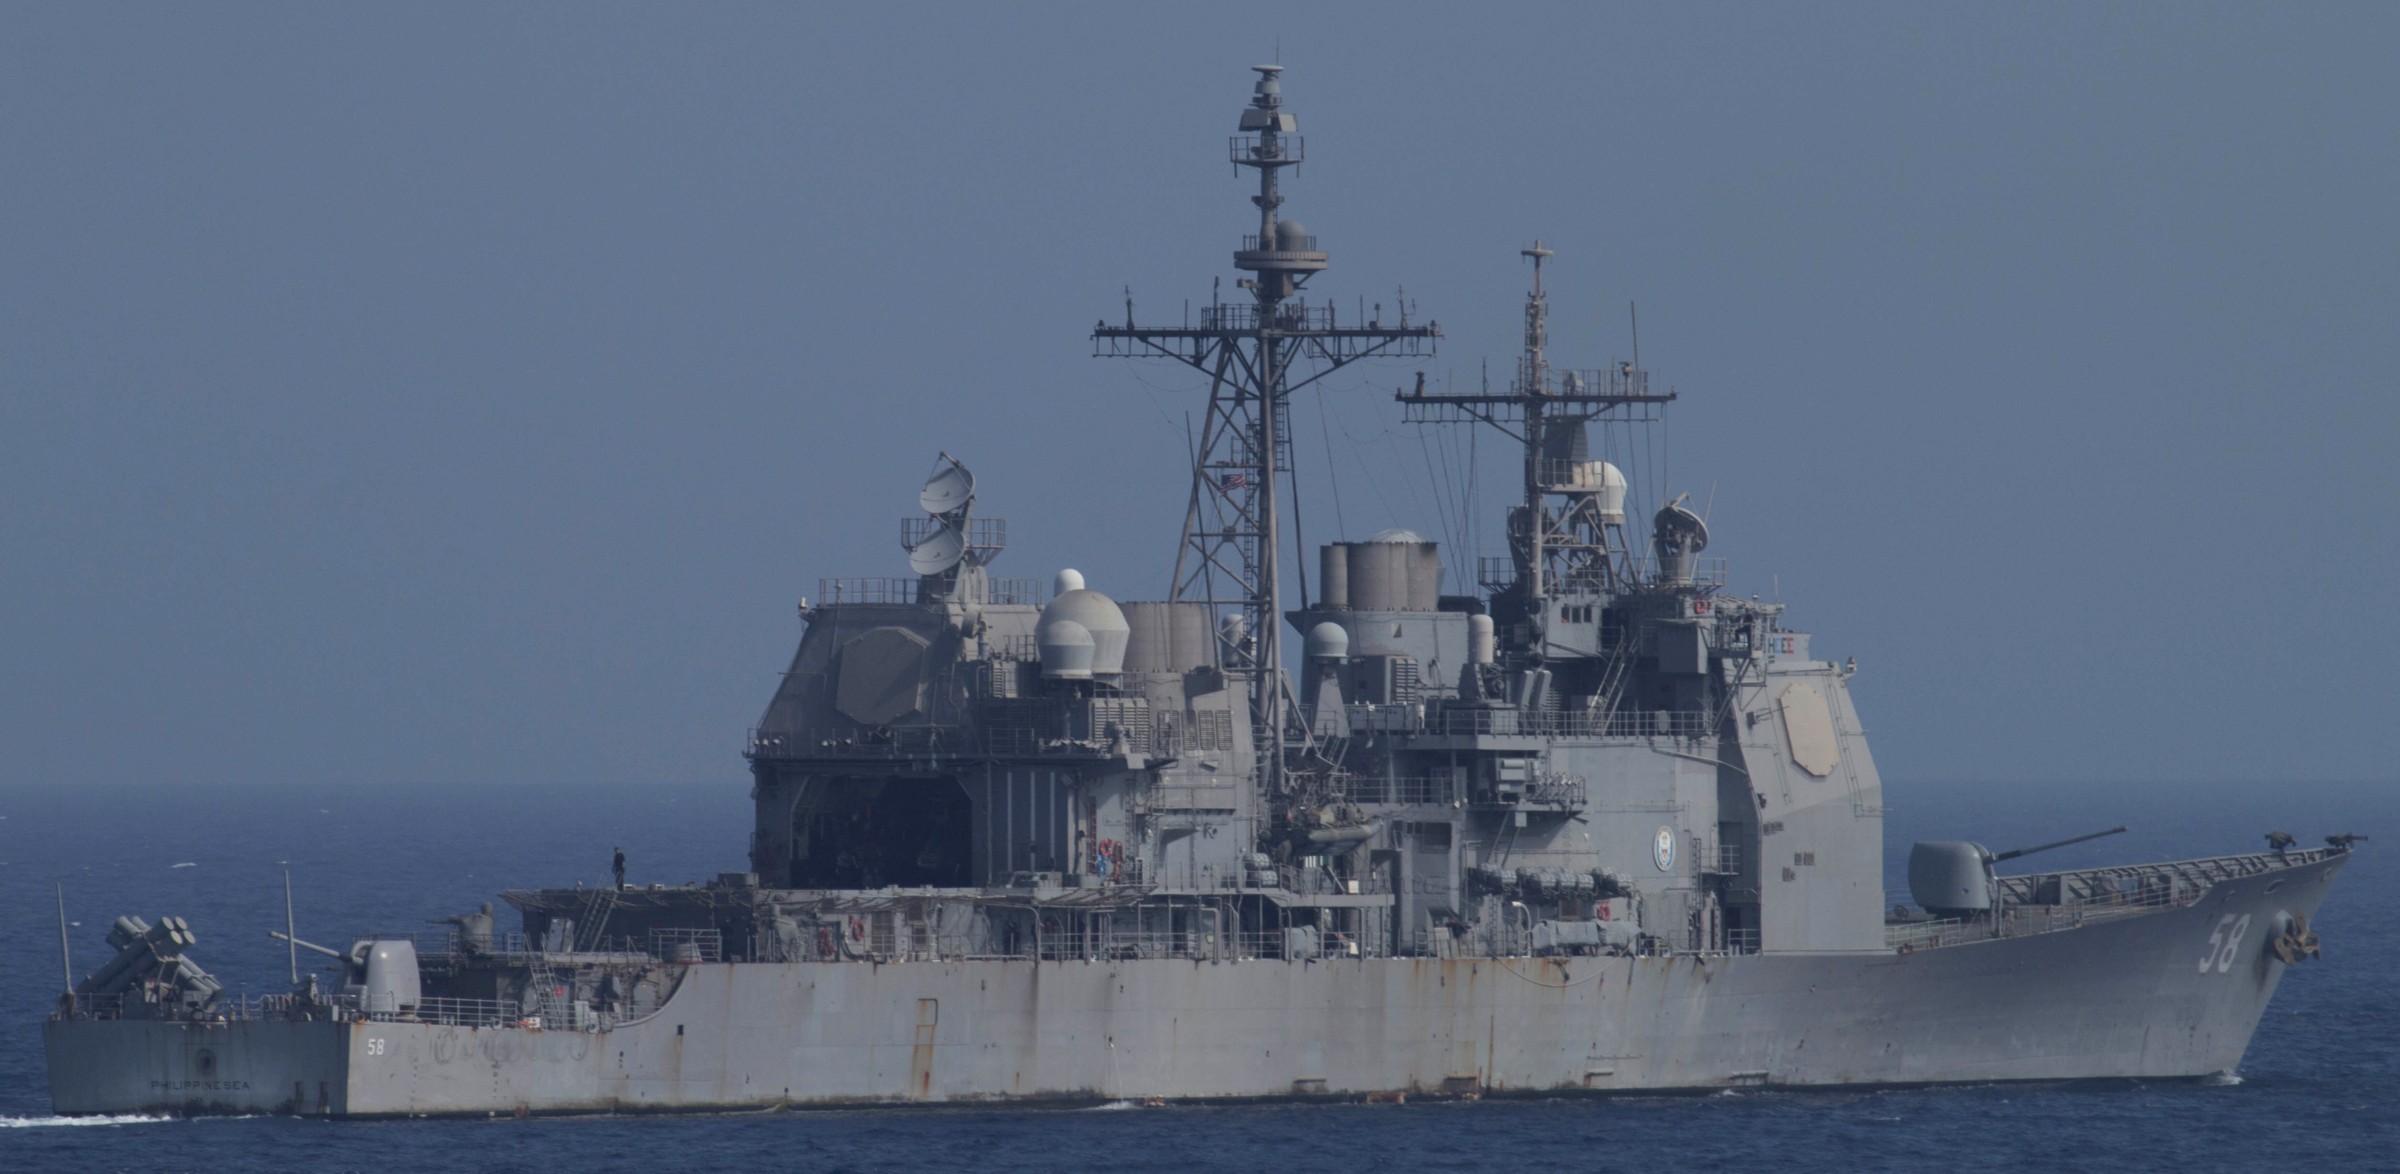 cg-58 uss philippine sea ticonderoga class guided missile cruiser aegis us navy 50